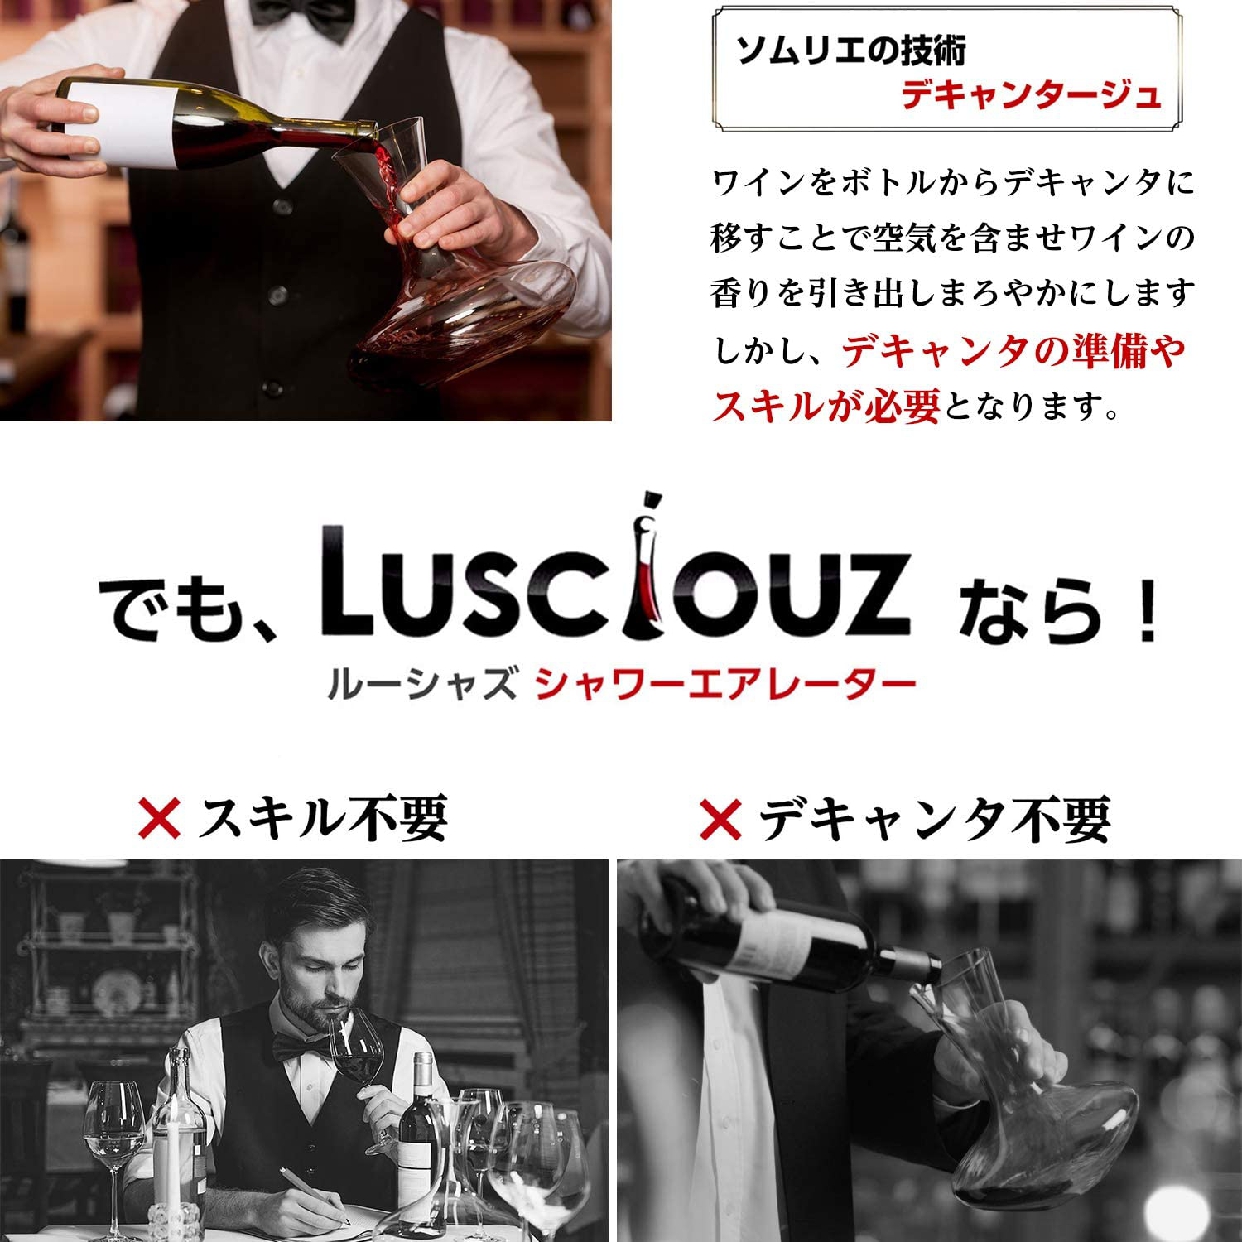 Lusciouz(ルーシャズ) シャワーエアレーターの商品画像4 